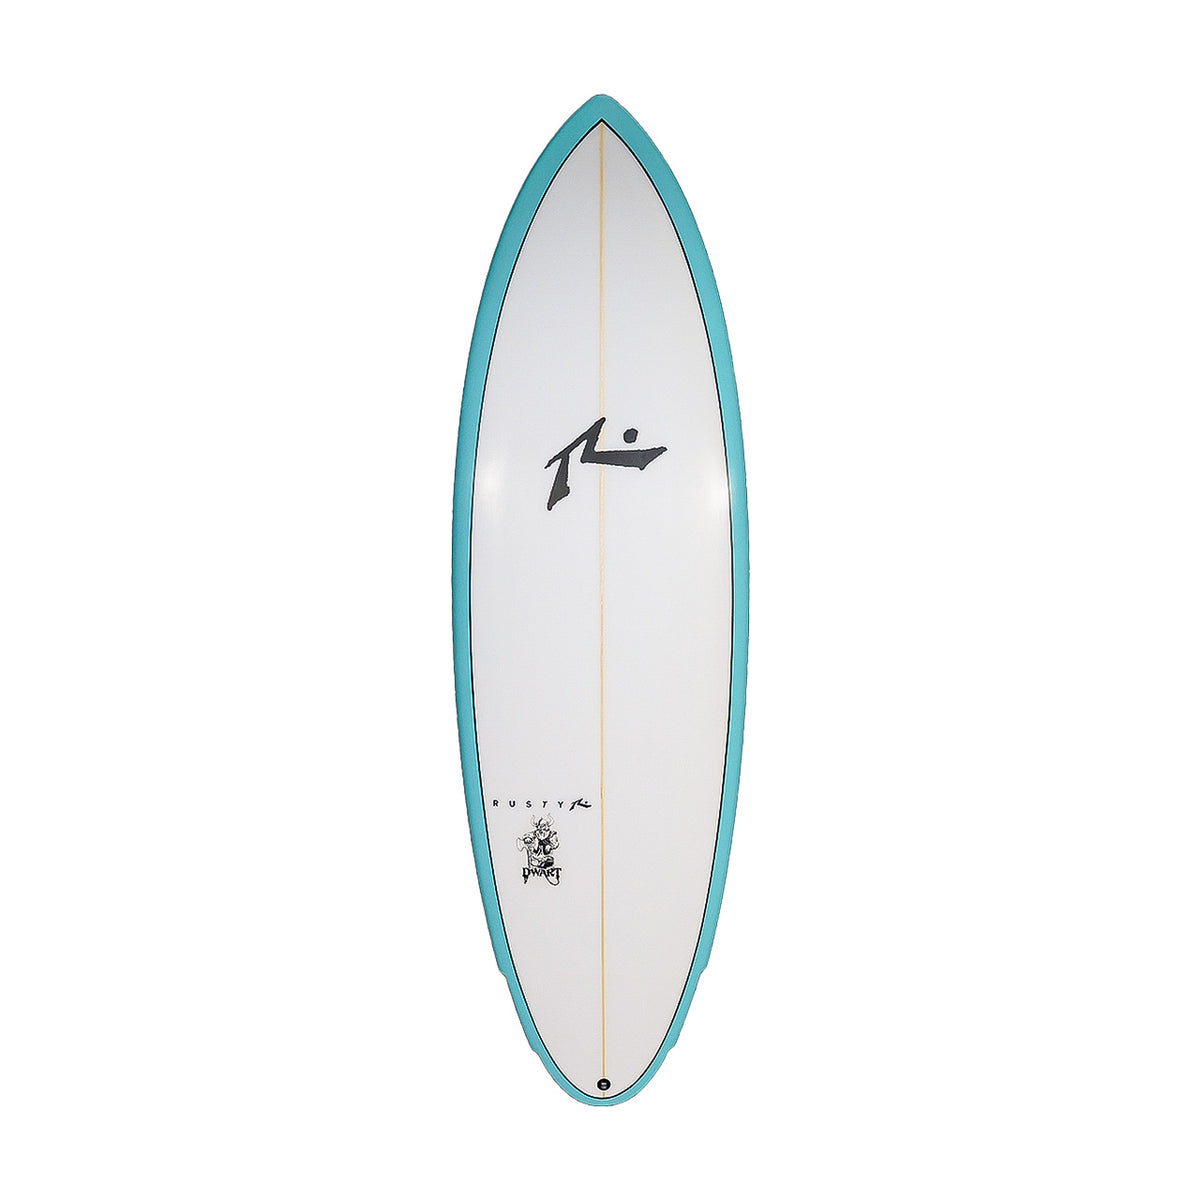 Dwart surfboard with blue rails - Rusty Surfboards In Stock